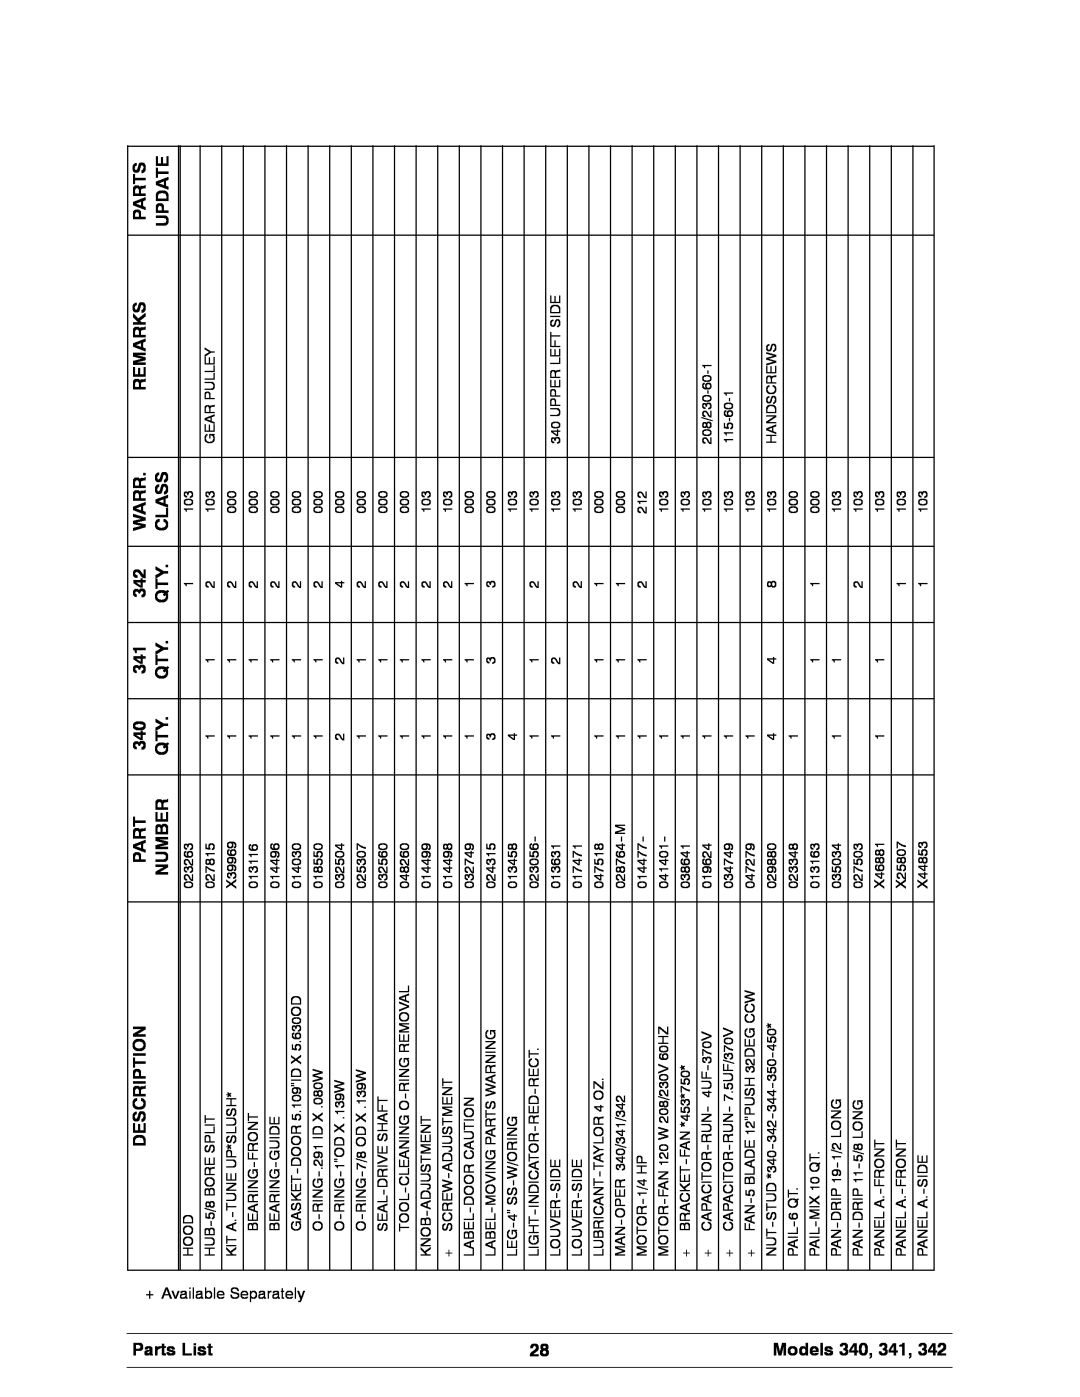 Taylor 342 manual Parts List, Models 340, 341, Description, Warr, Remarks, Number, Class, Update 